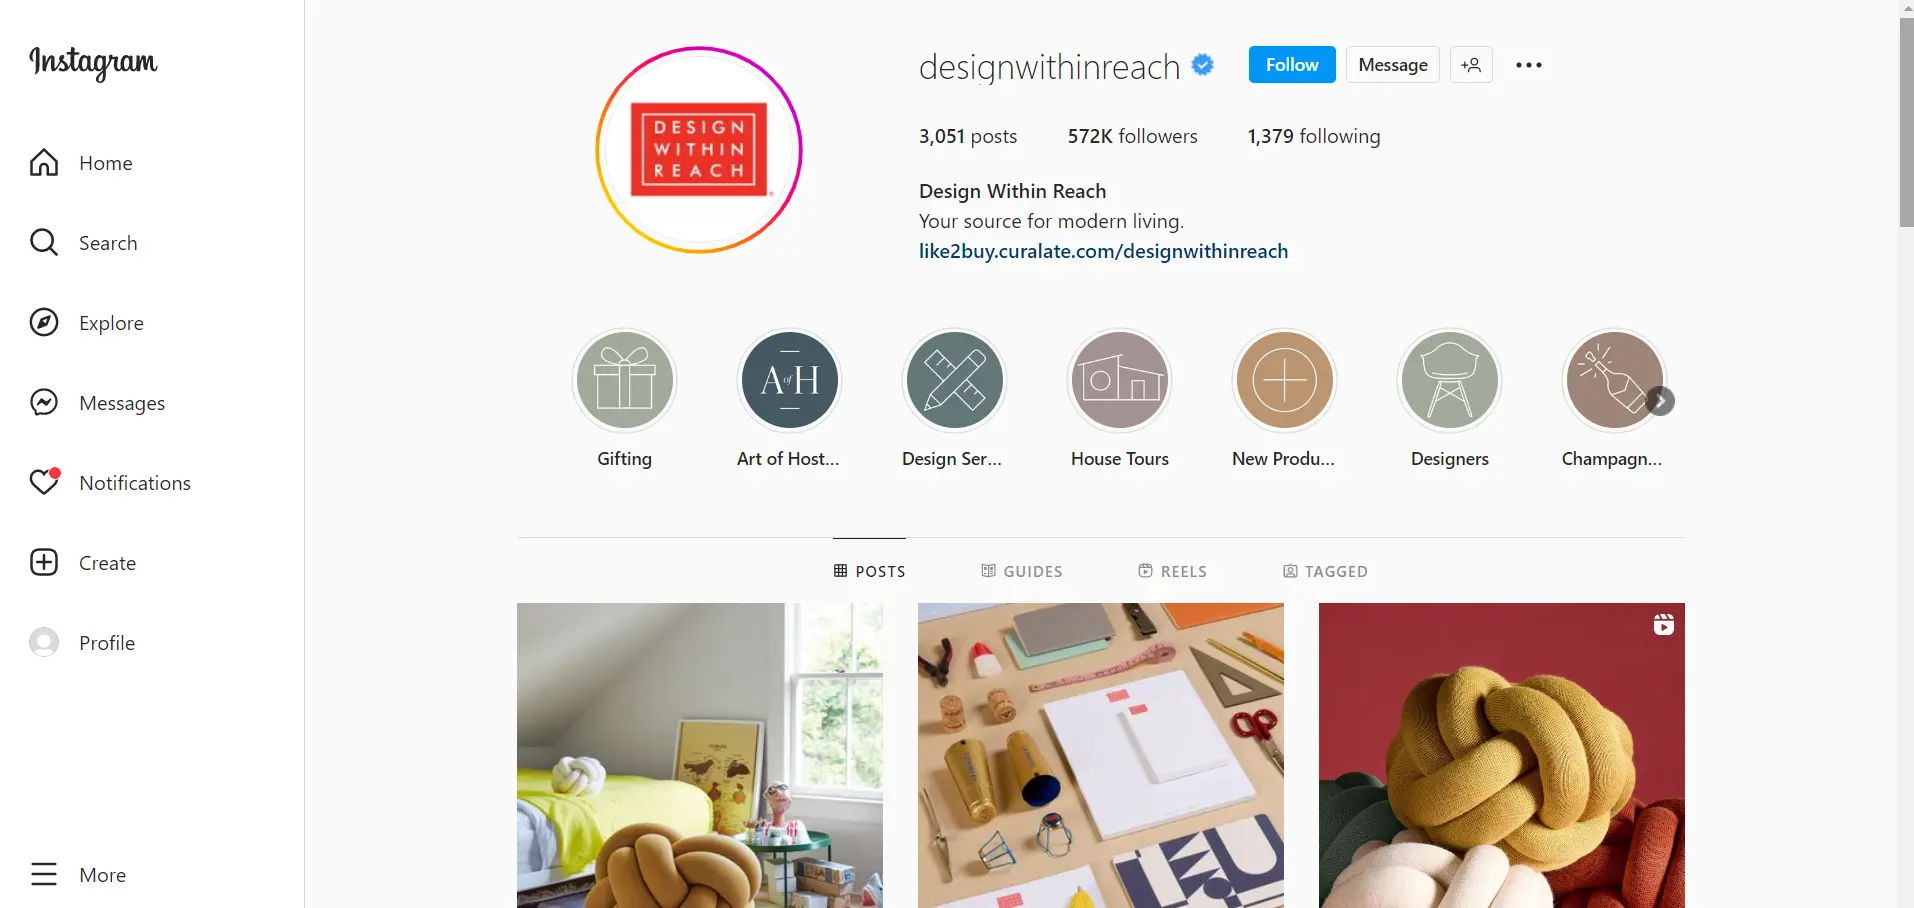 Design Within Reach Instagram Page 